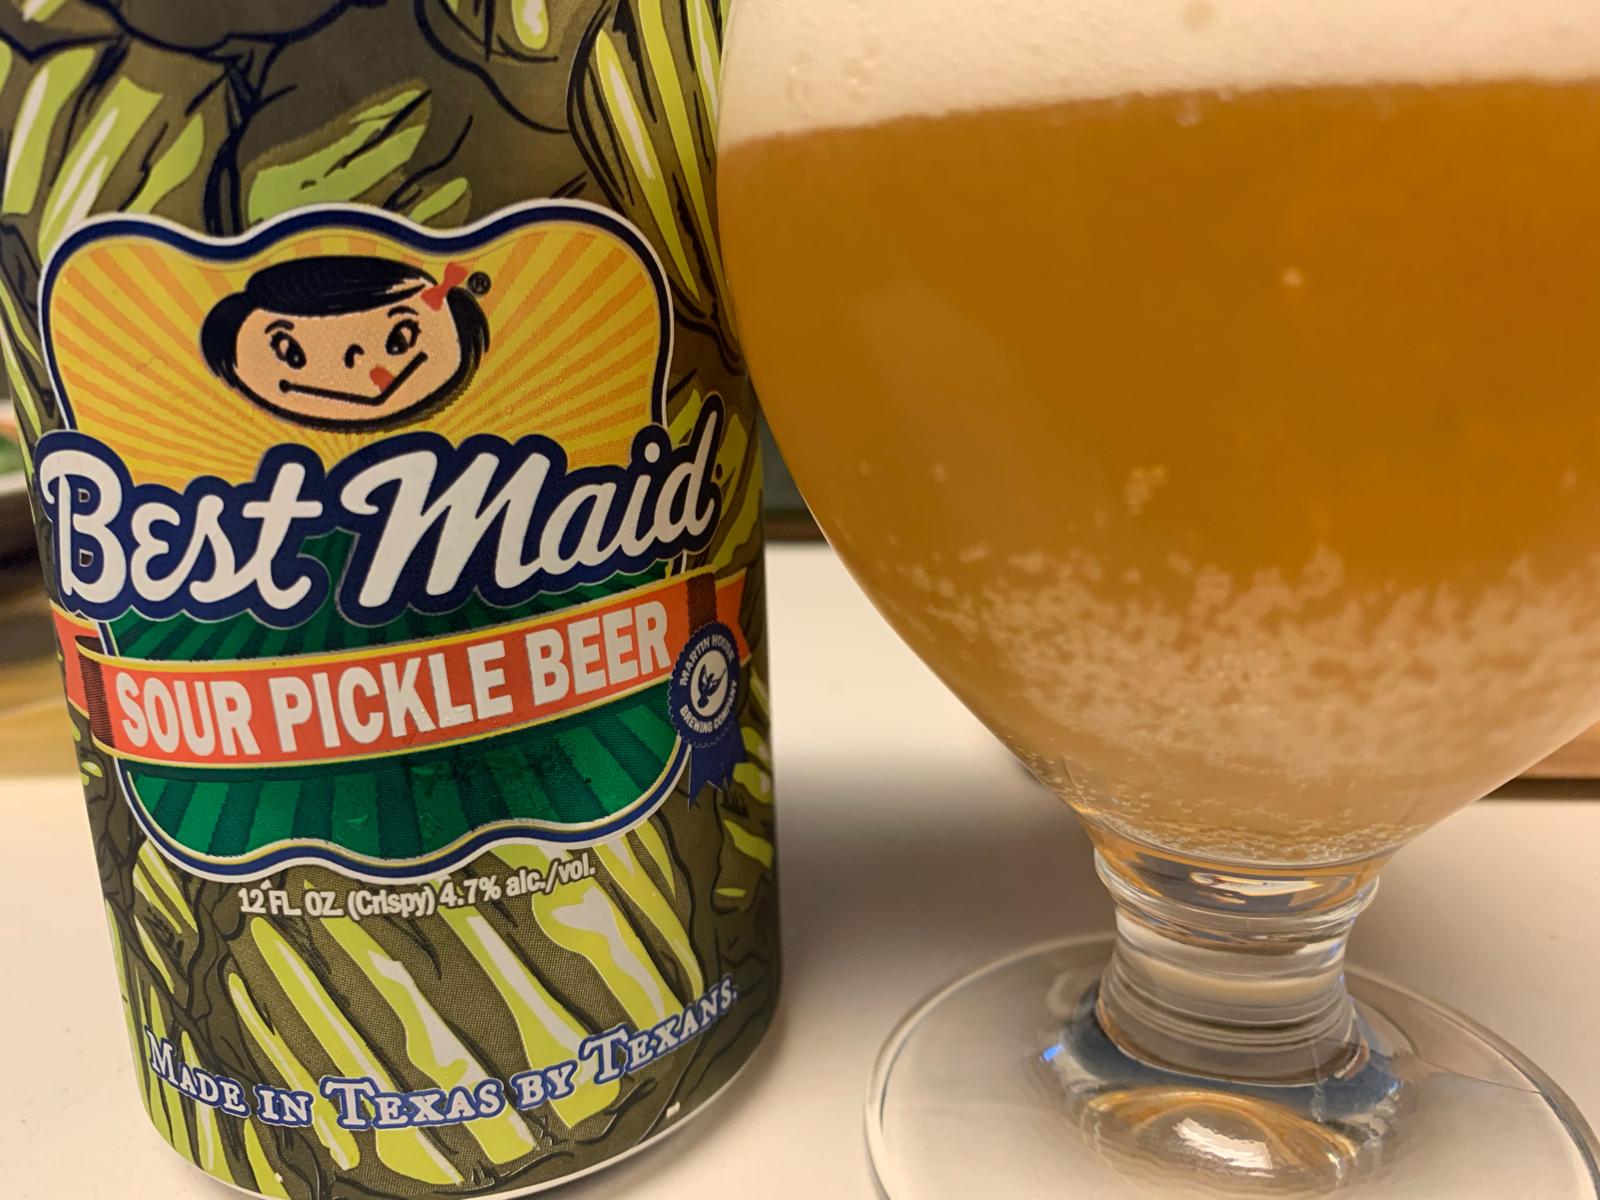 Best Maid Sour Pickle Beer